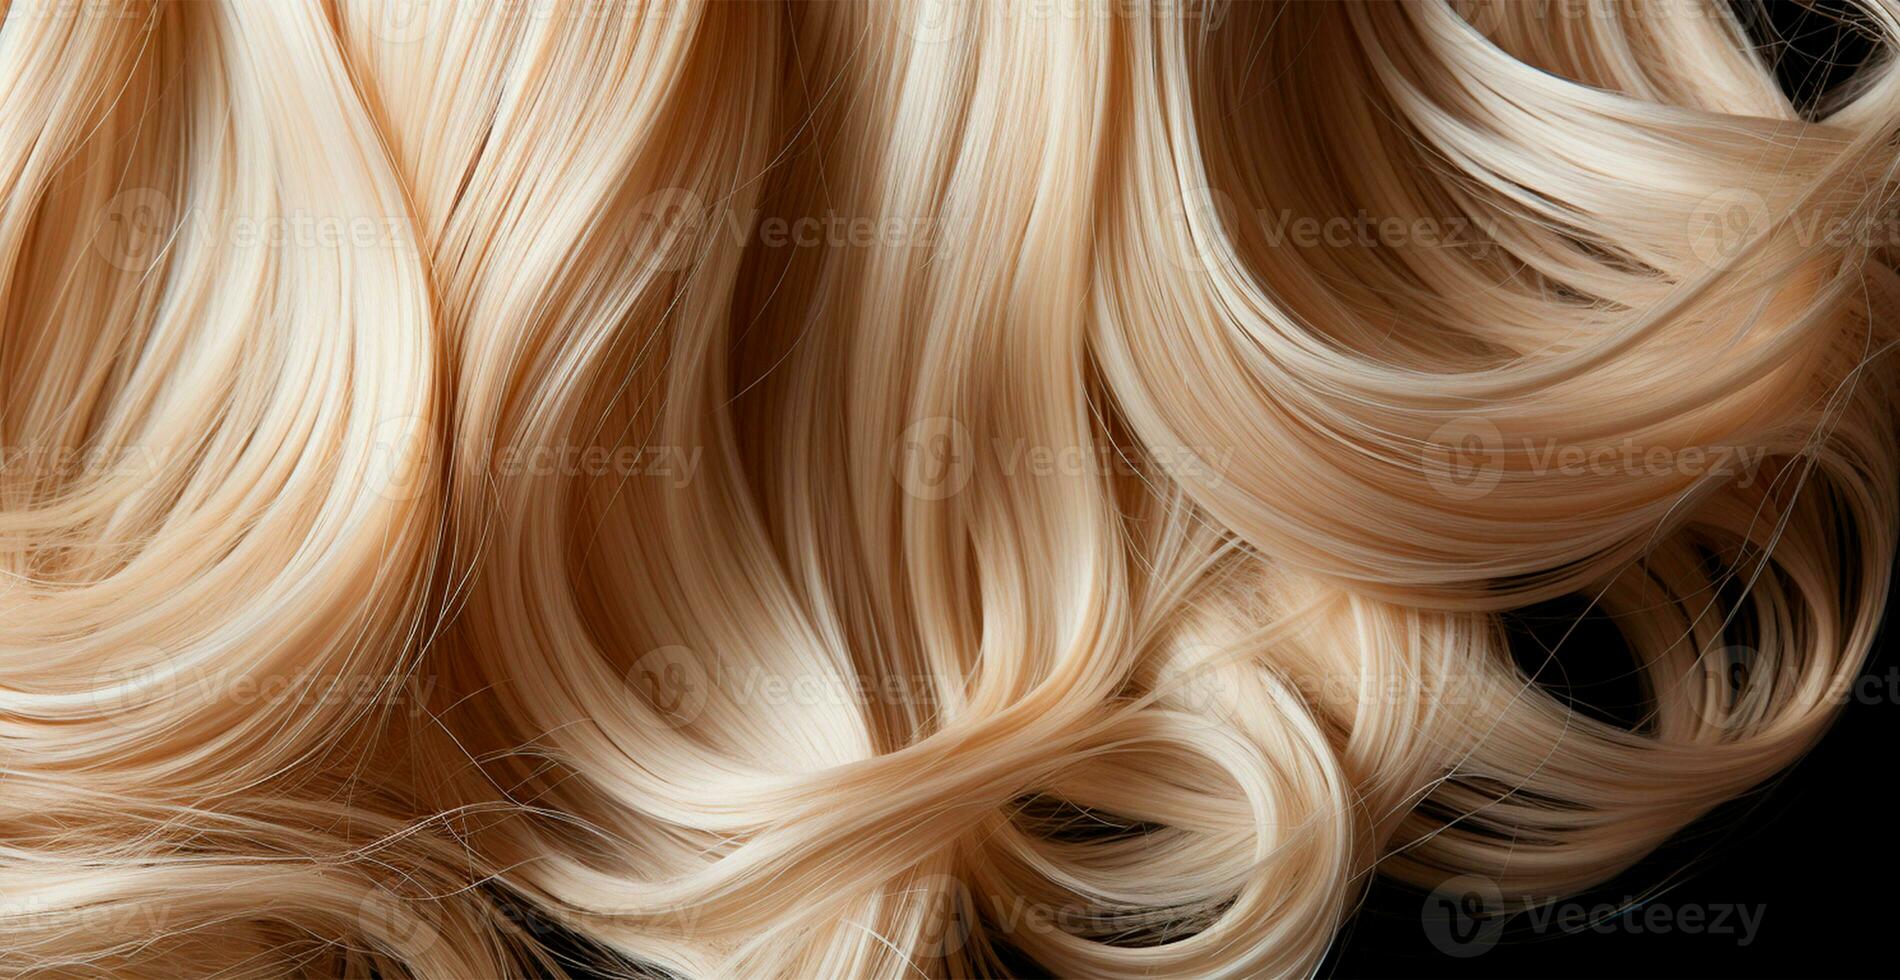 blond haar- detailopname net zo achtergrond. vrouwen lang natuurlijk blond haar. styling golvend glimmend krullen - ai gegenereerd beeld foto